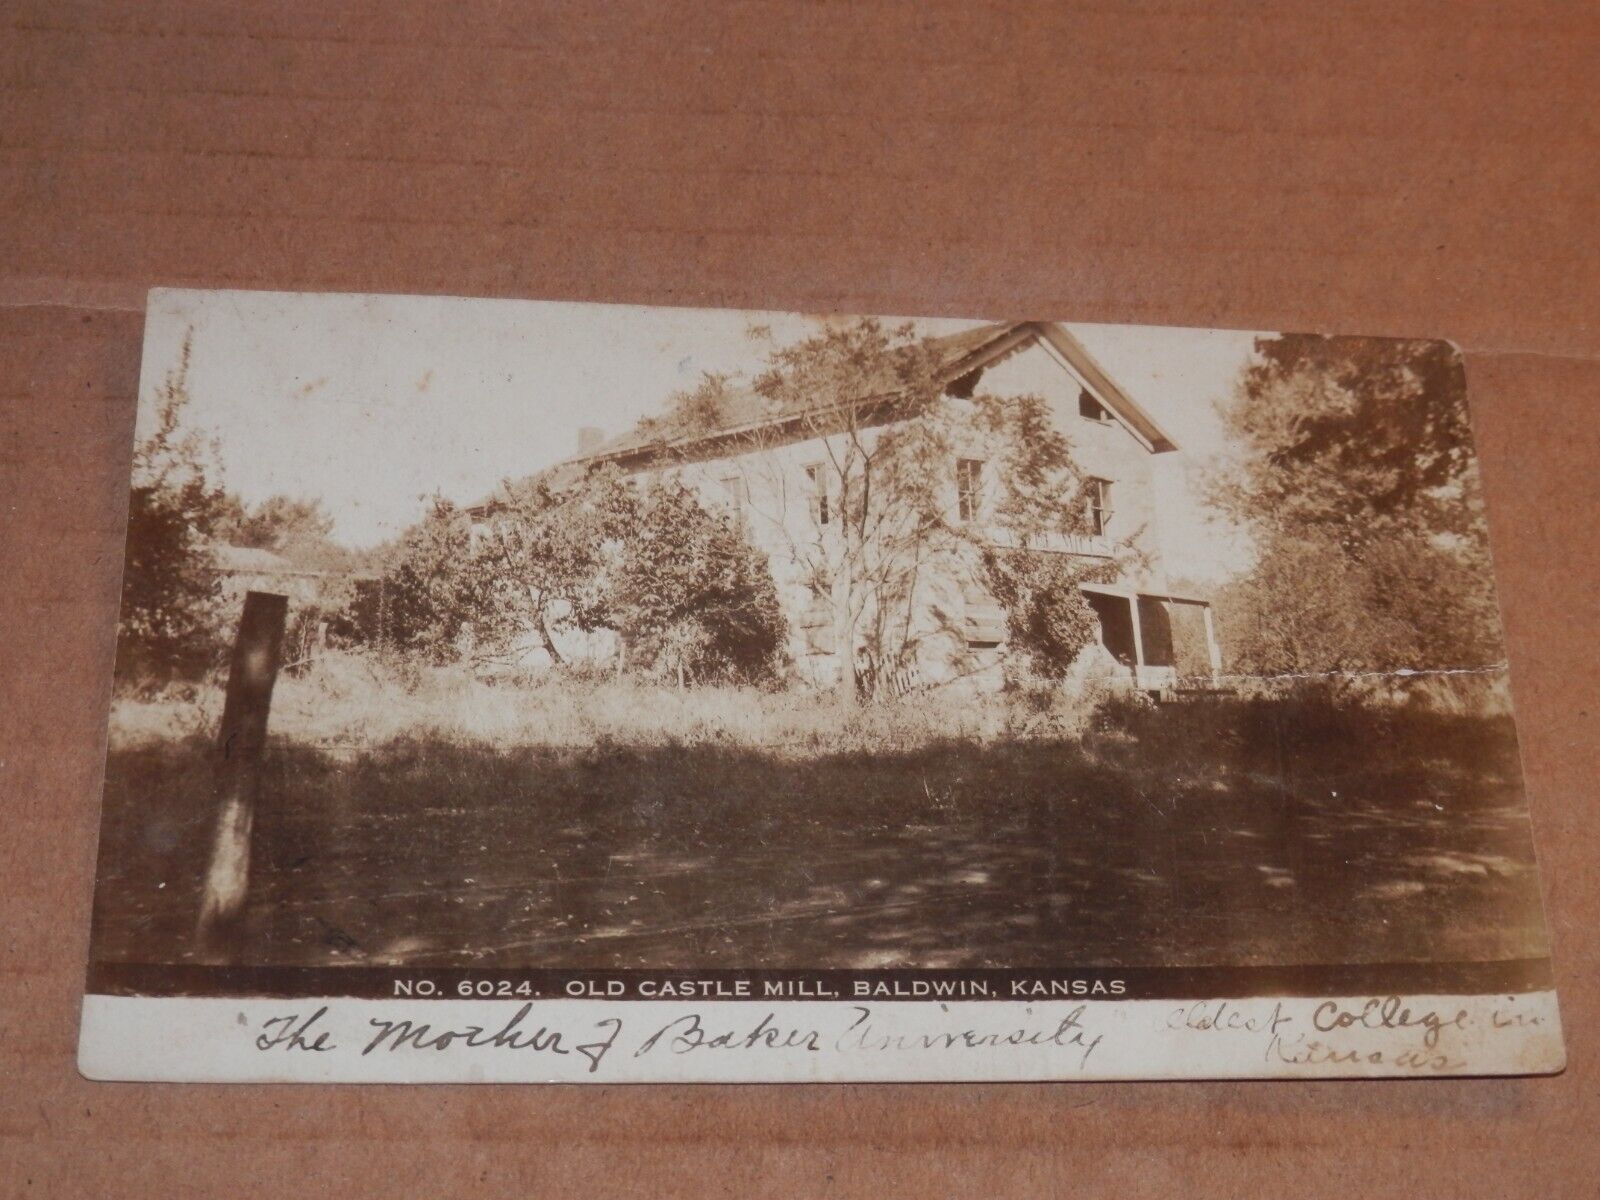 BALDWIN KANSAS - 1909 USED REAL PHOTO POSTCARD - OLD CASTLE MILL - DOUGLAS CO.